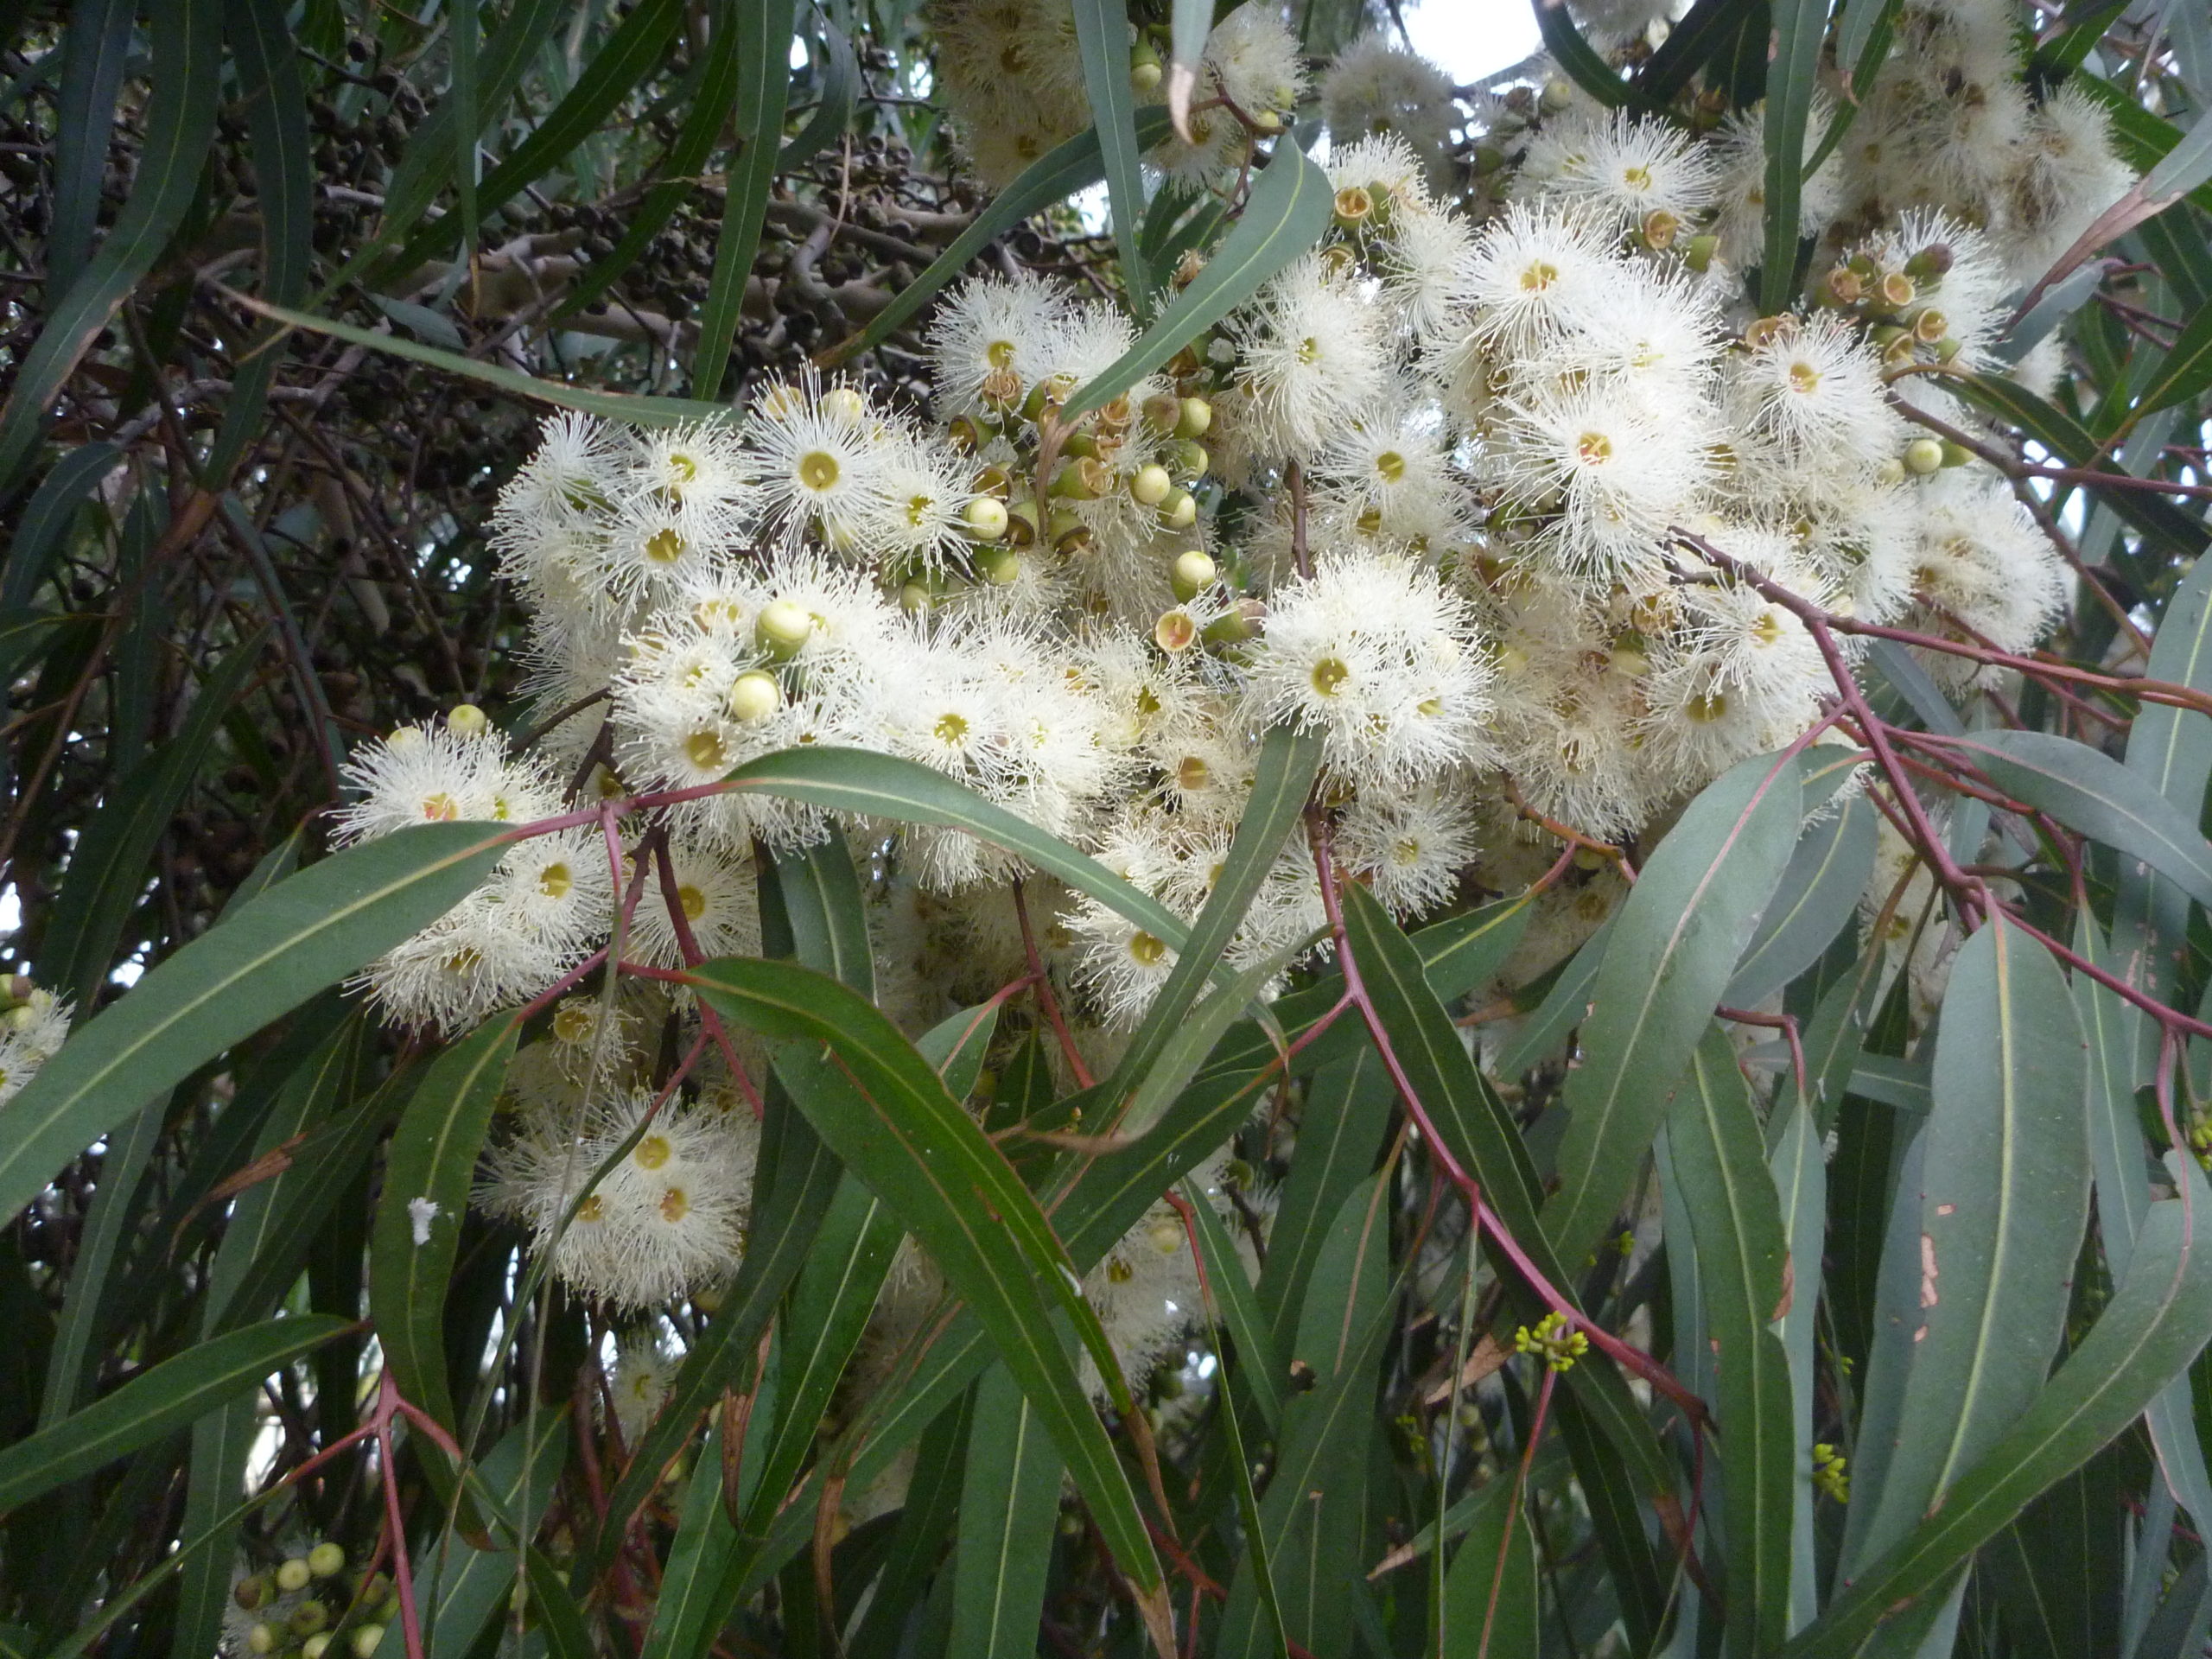 Eucalyptus Lemon Scented Gum flowers, eucalyptus essential oils, Australian eucalyptus oils